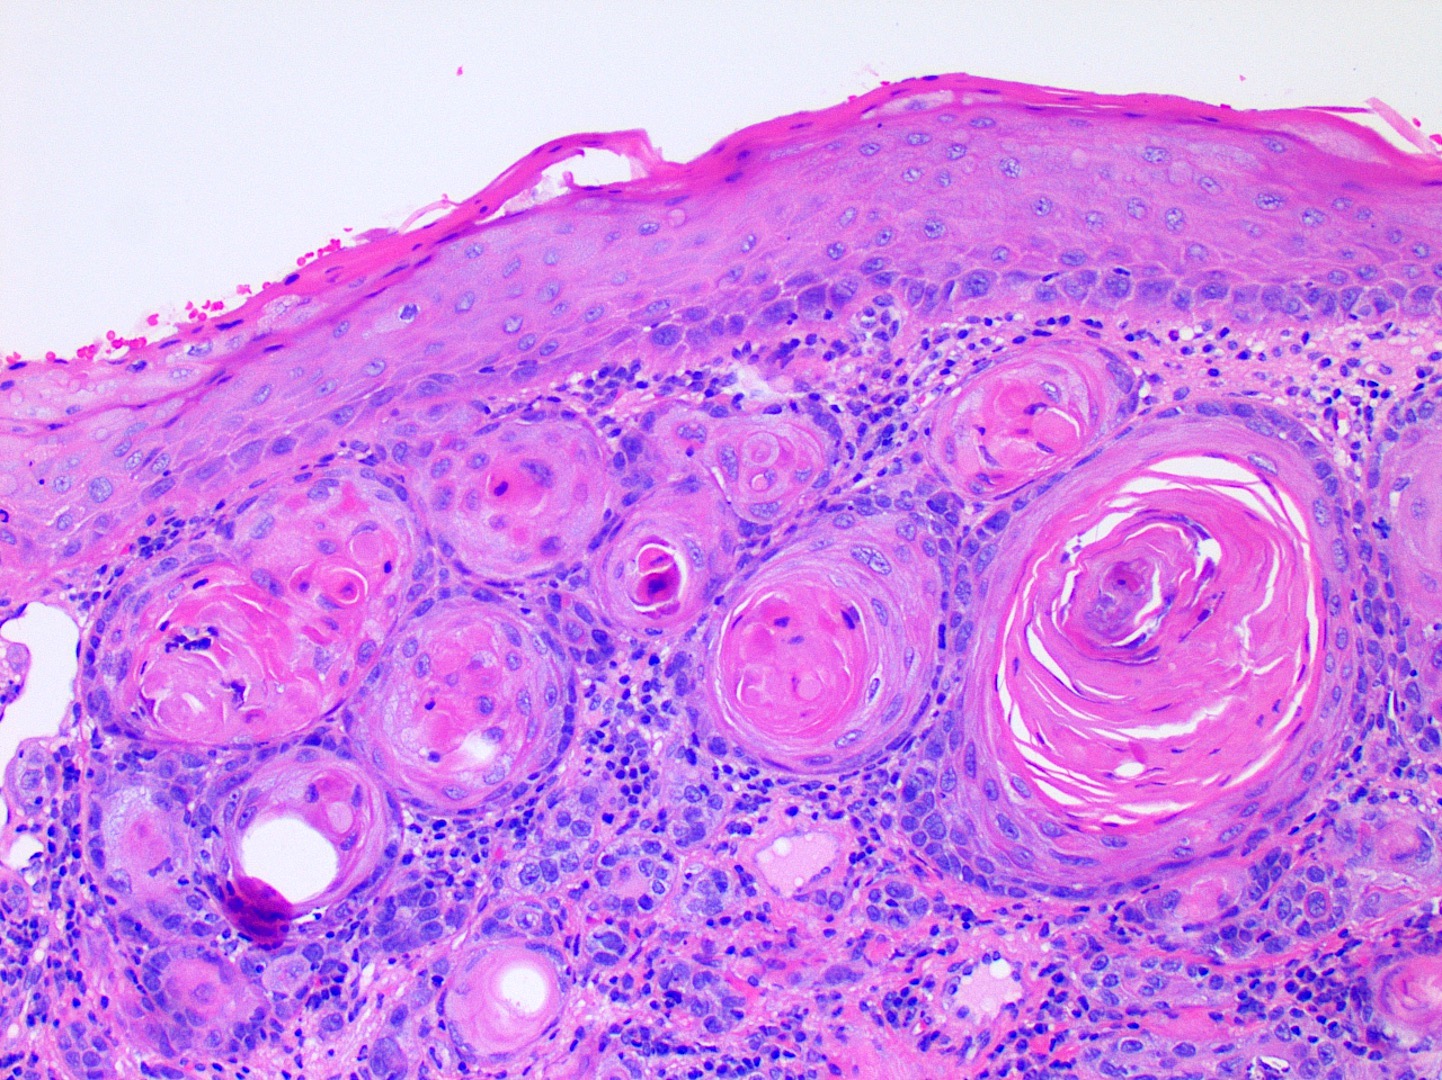 alveolar mucosa histology